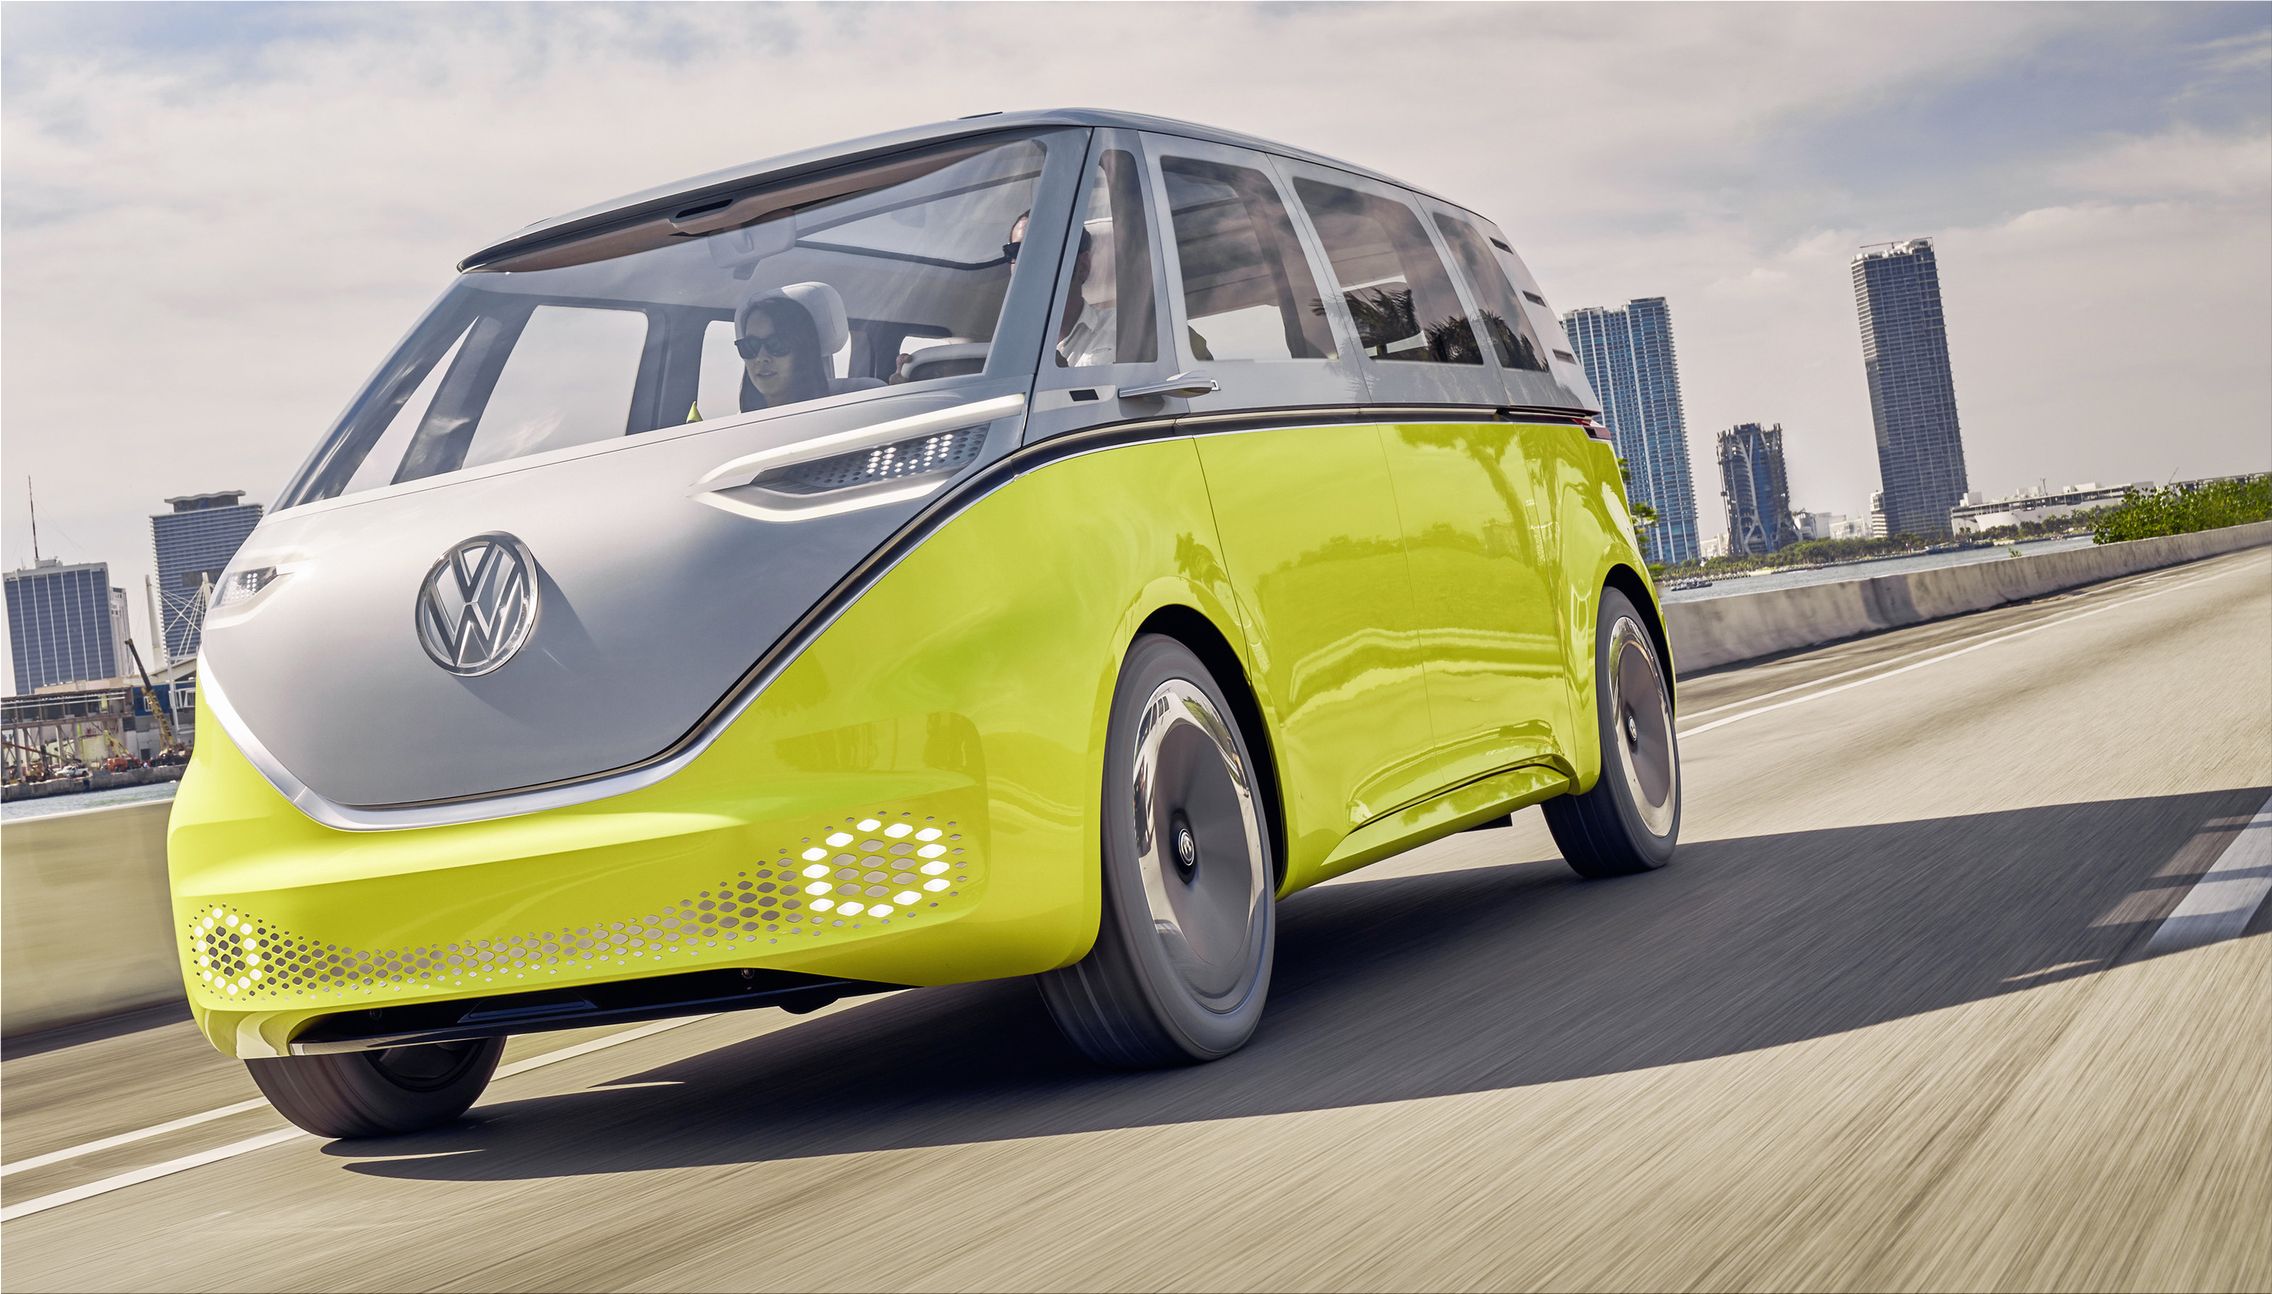 The allelectric and autonomous Volkswagen ID BUZZ minivan Electric